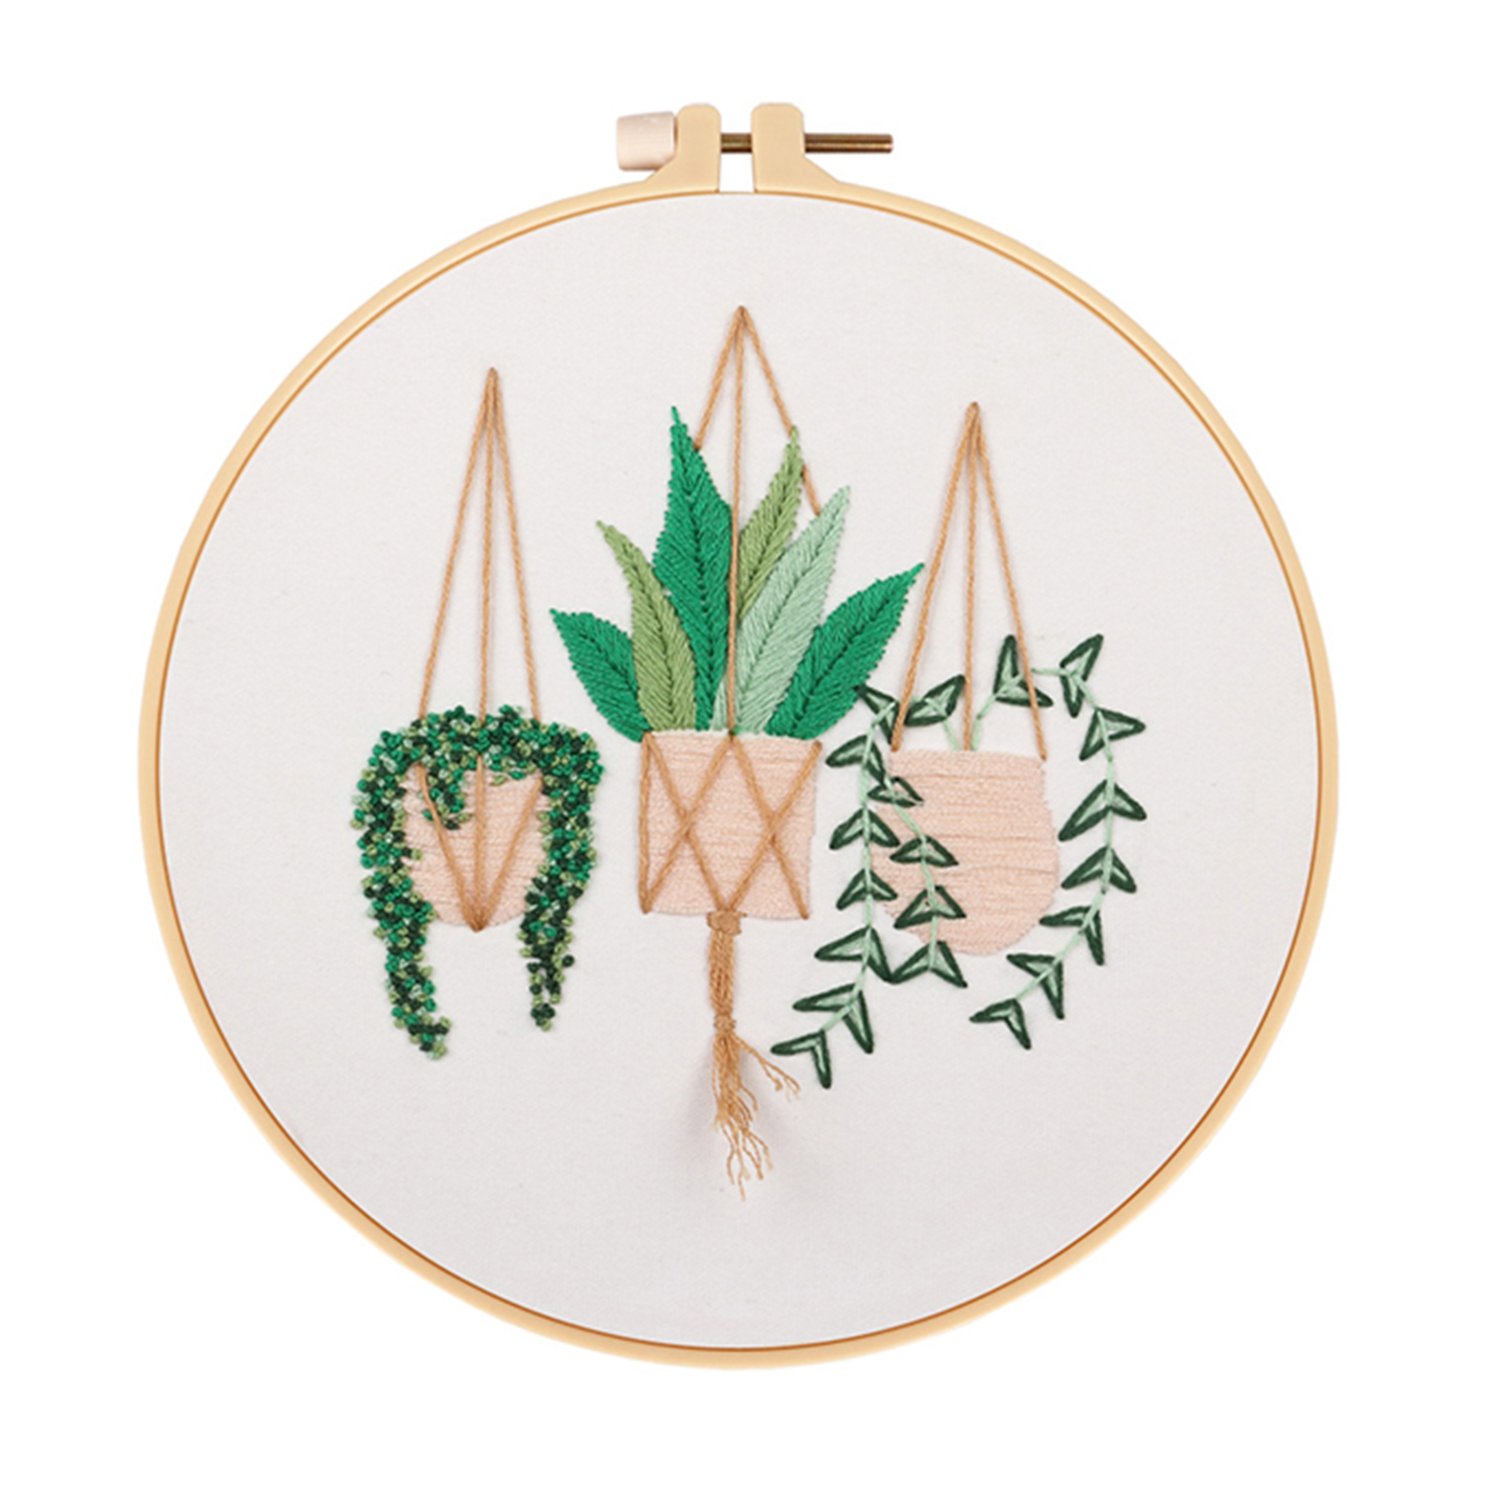 DIY Handmade Embroidery Cross stitch kit - Hanging Basket Plants Pattern